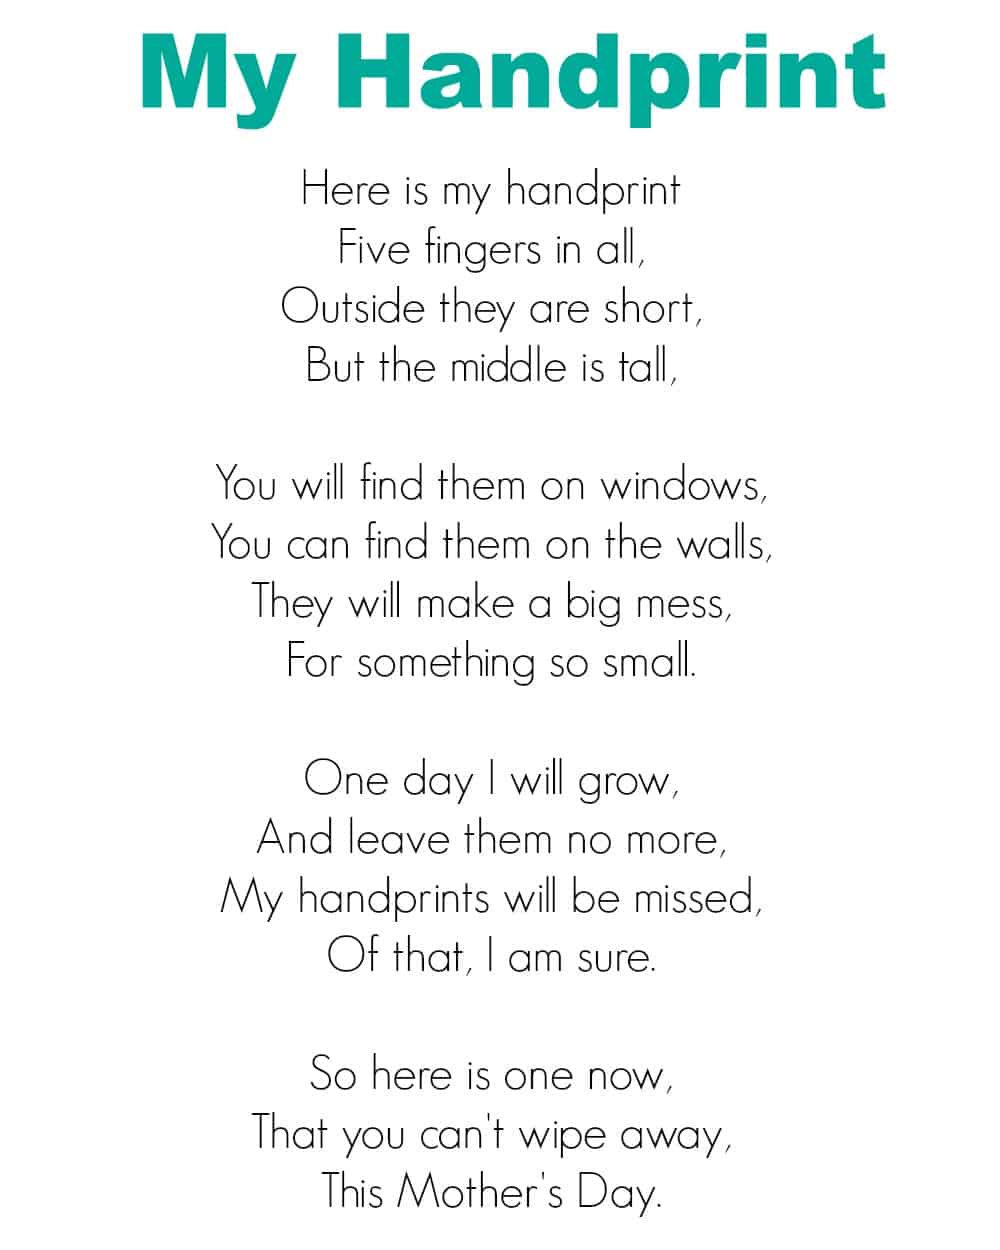 My Handprint Mother's Day Poem 